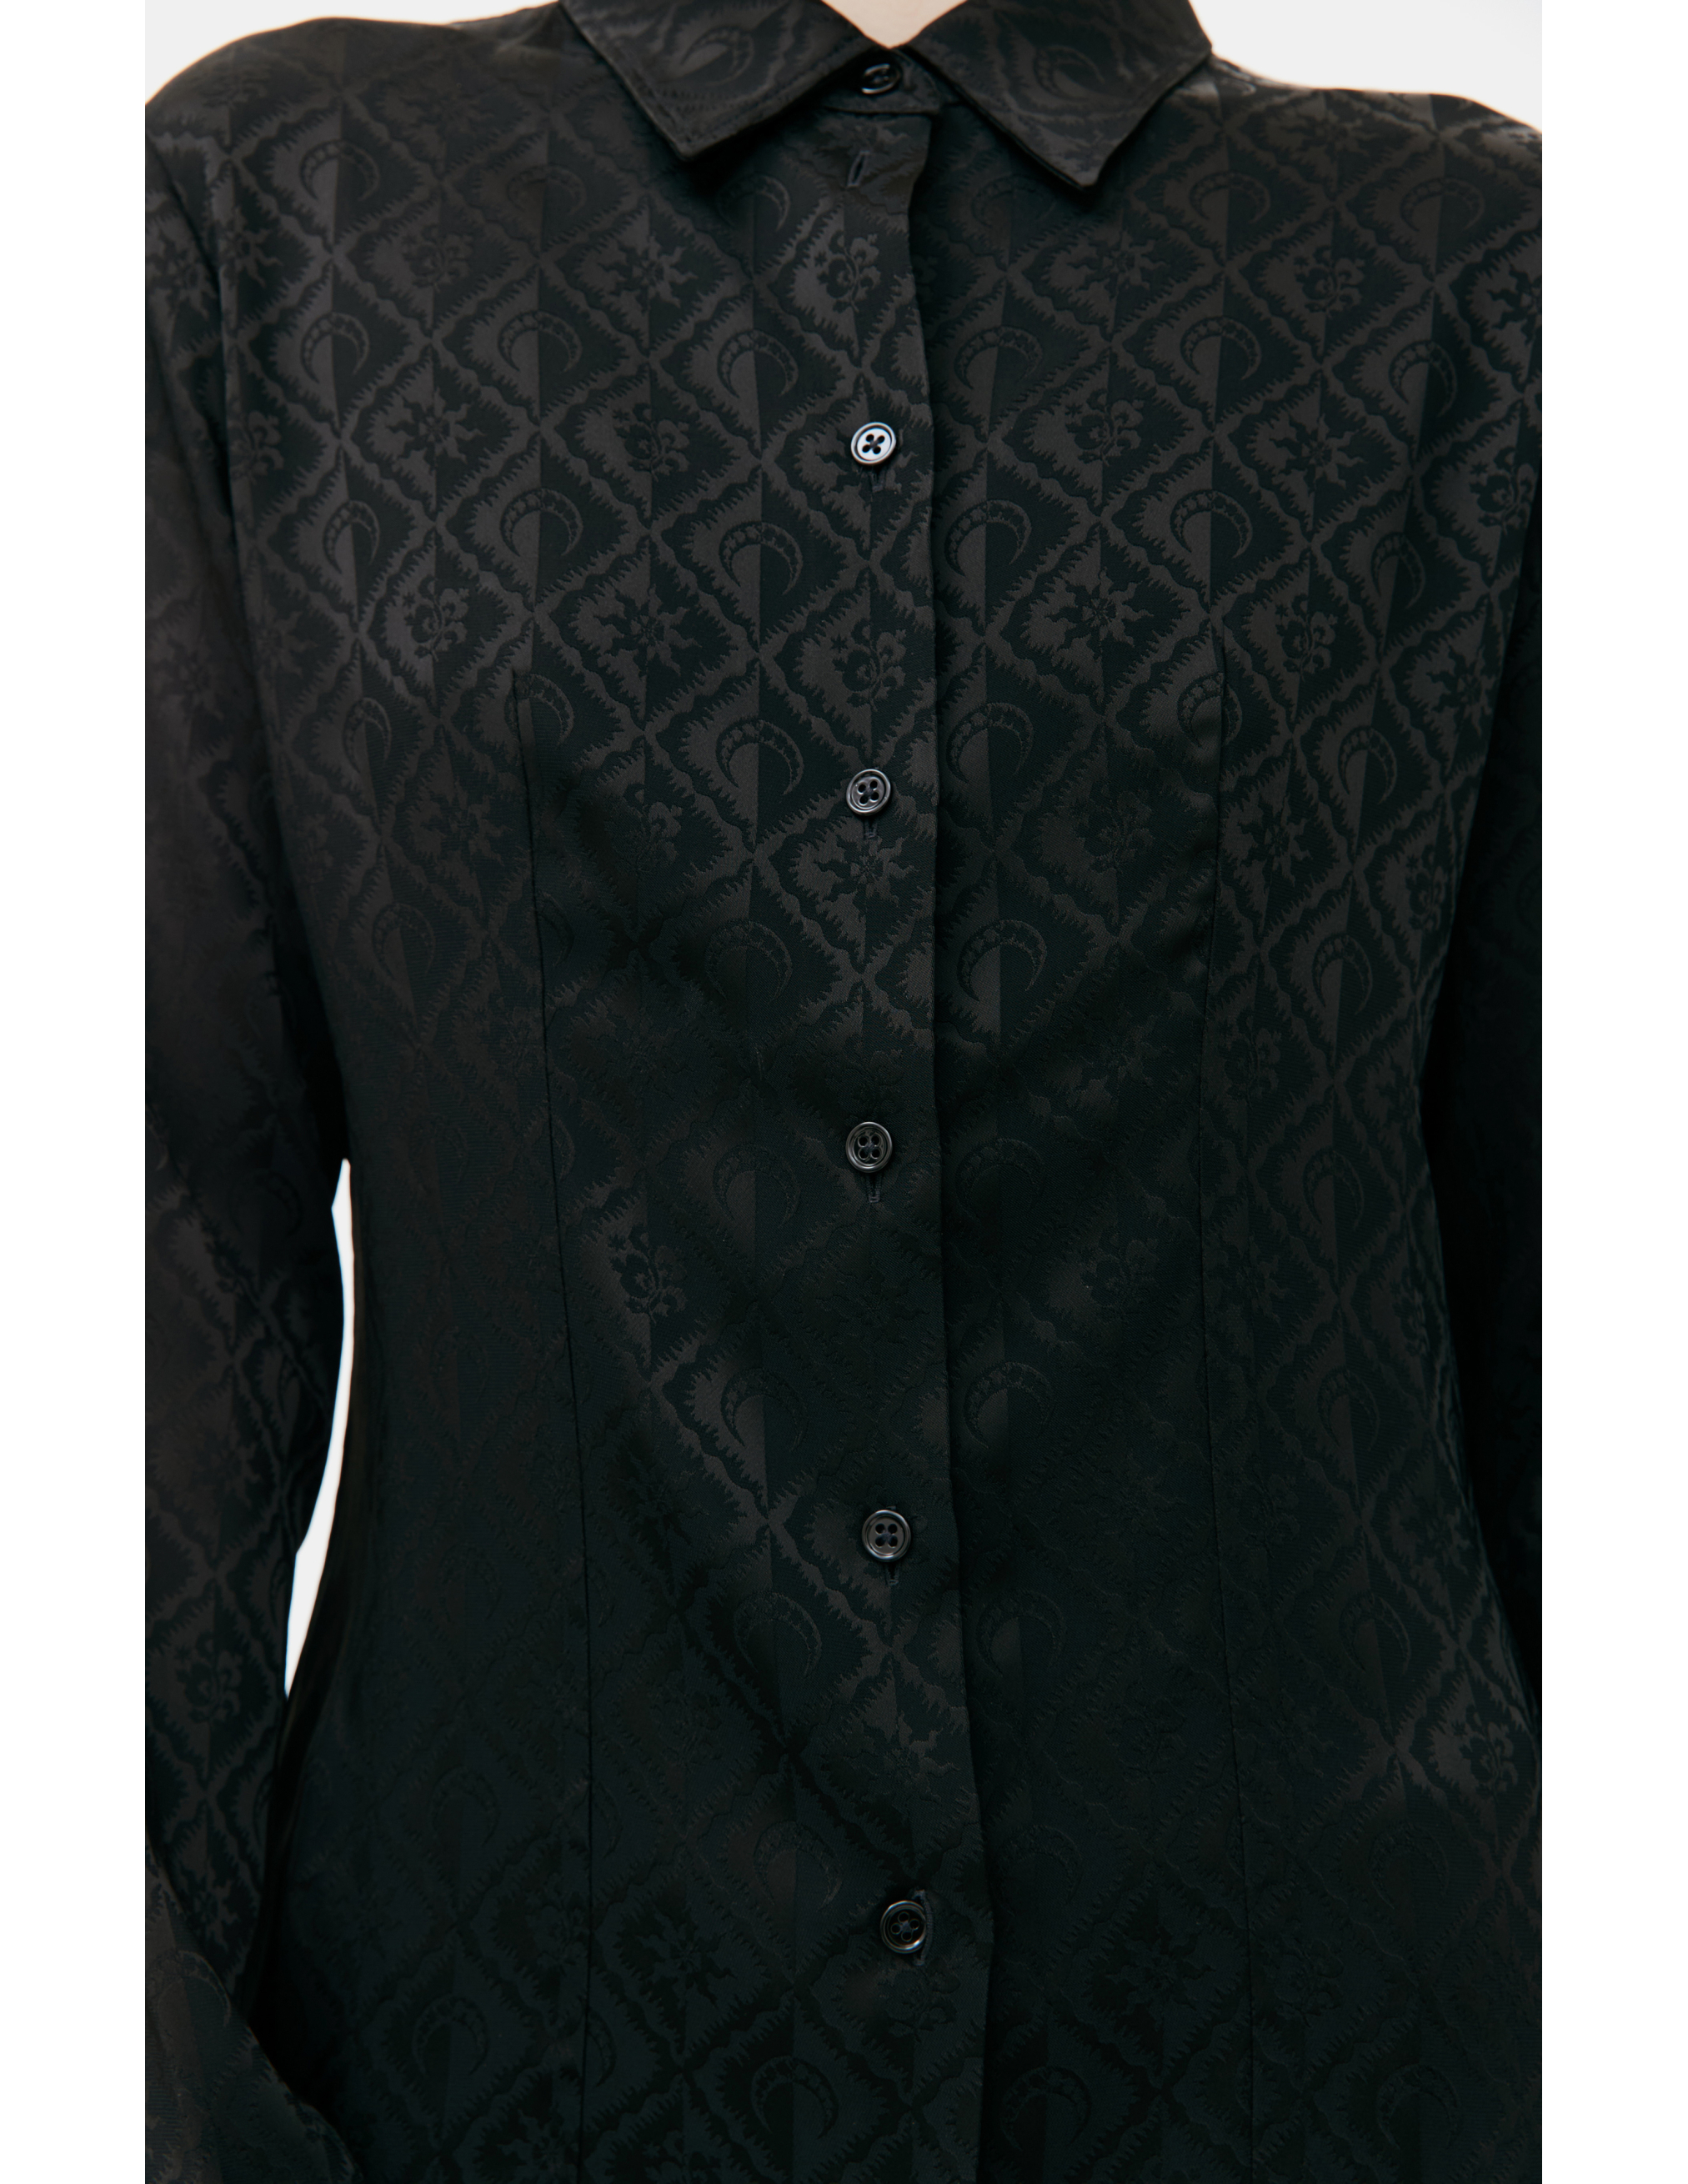 Черная рубашка с монопринтом MARINE SERRE WSI015/CWOV0023/BK99, размер 36;38;40;42 WSI015/CWOV0023/BK99 - фото 4